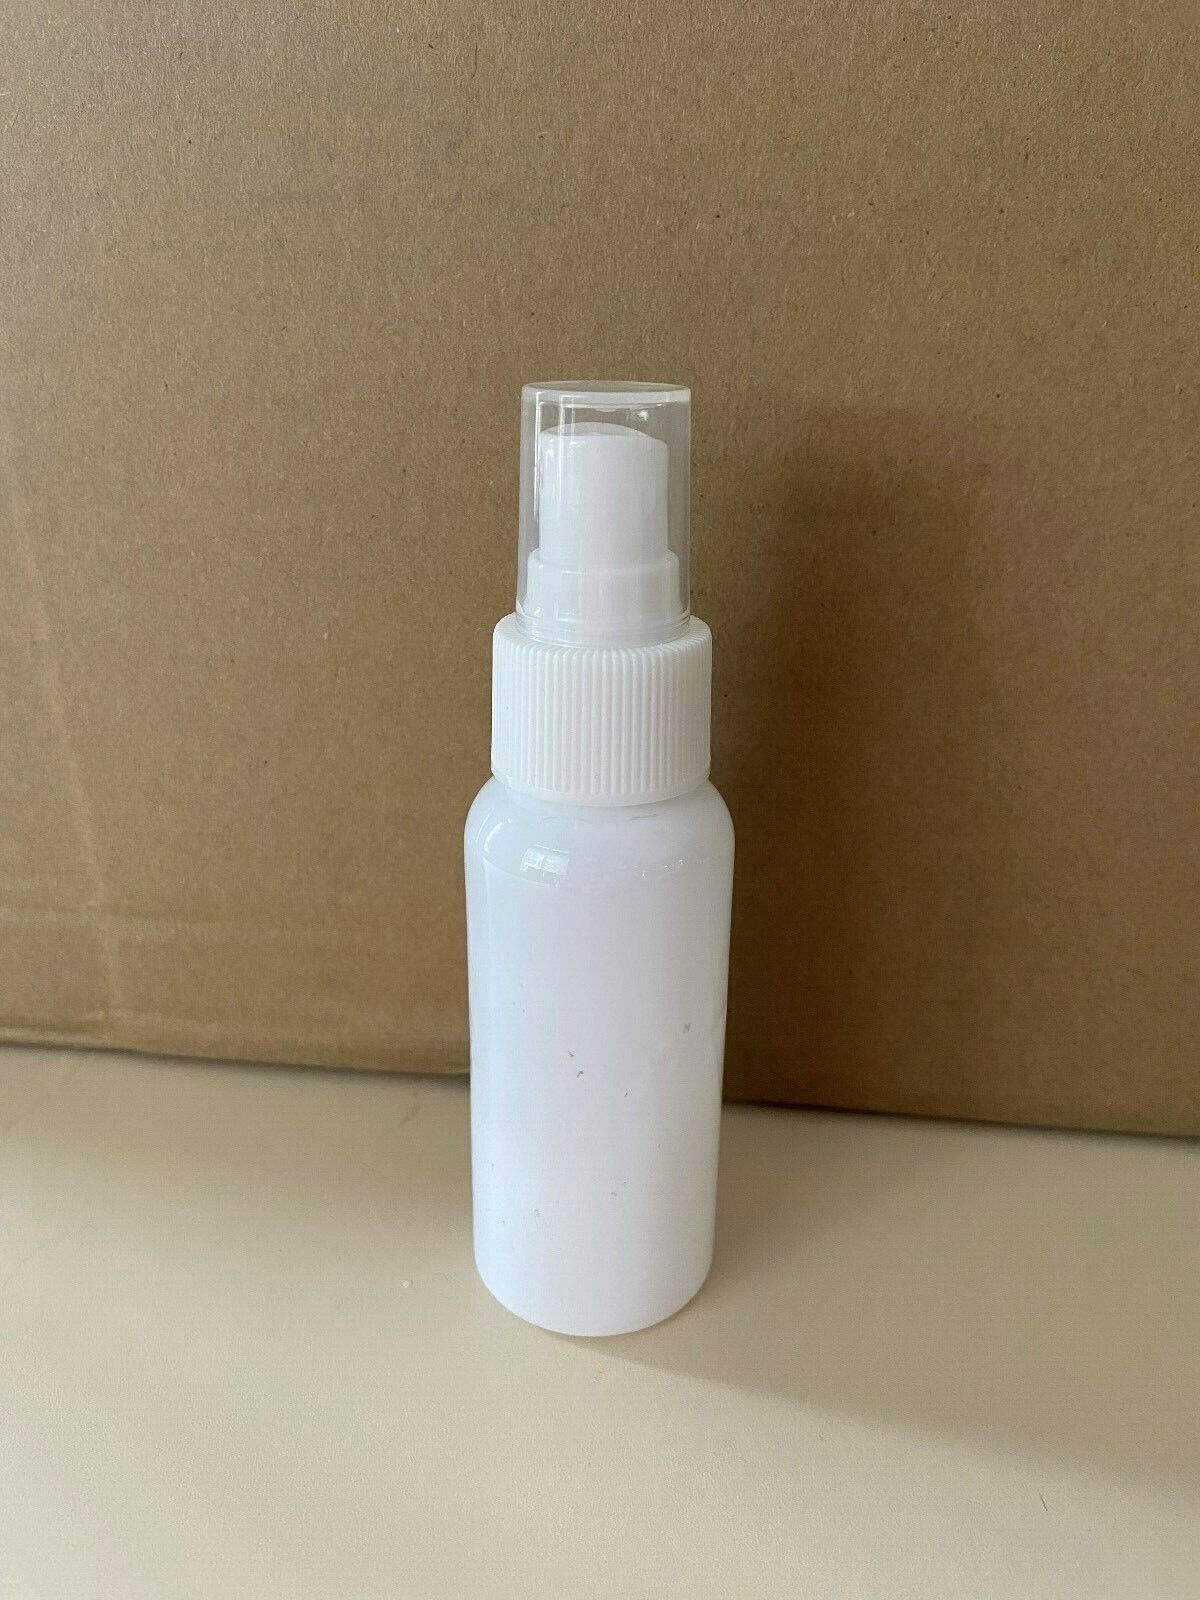 2 oz. White Cosmo Round PET Sale item Plastic Bottle 10 Travel Spray Empty Sales for sale